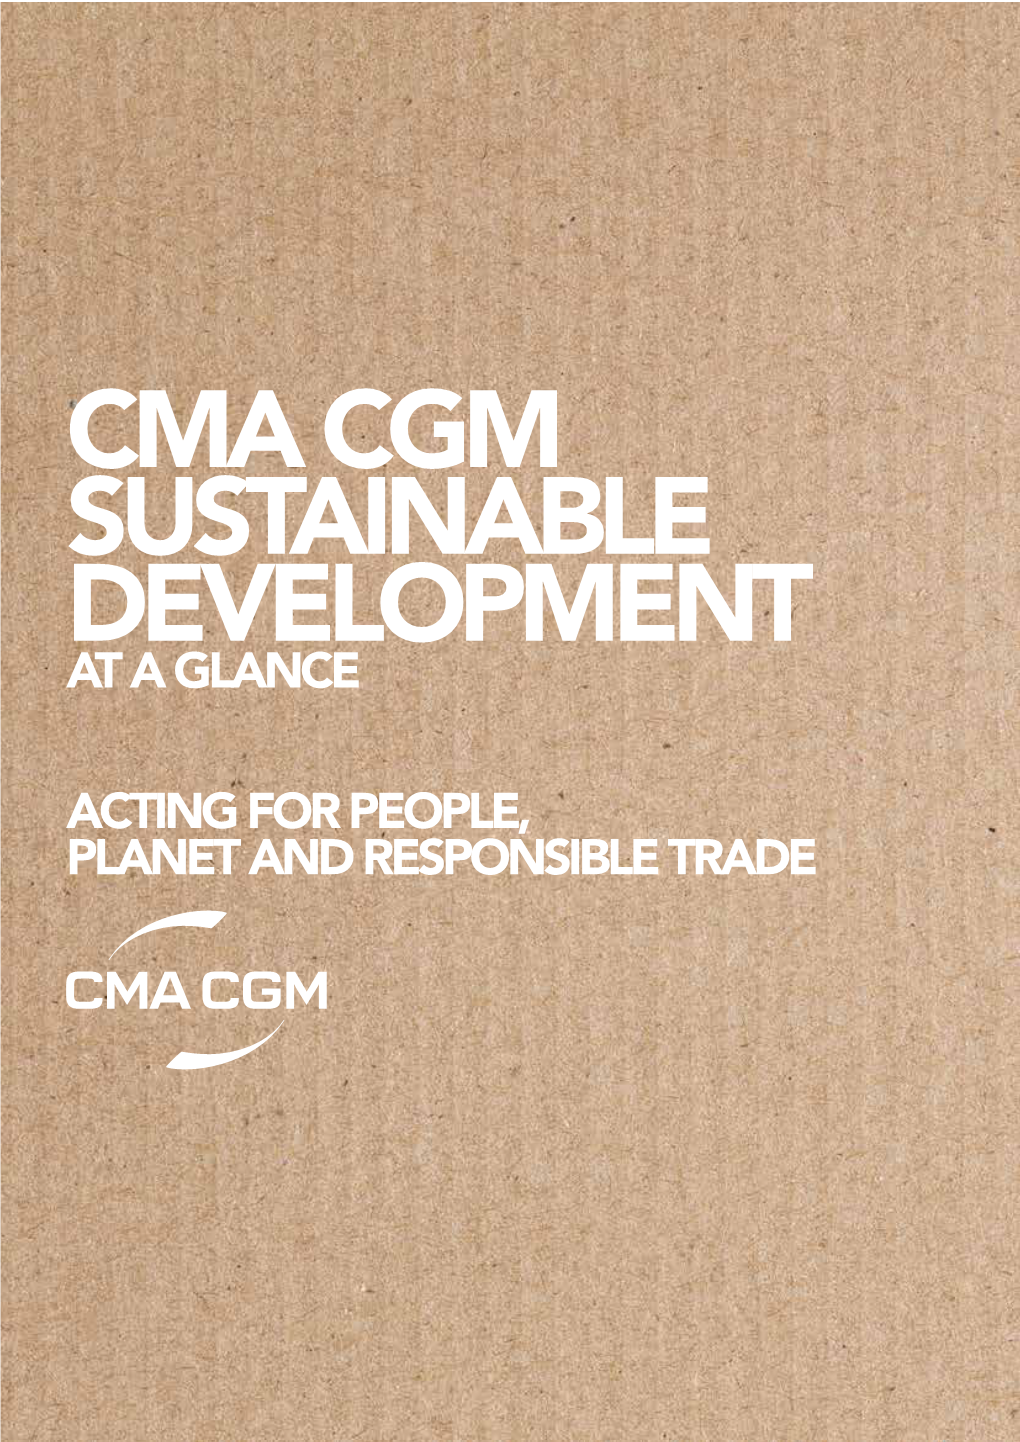 Cma Cgm Sustainable Development